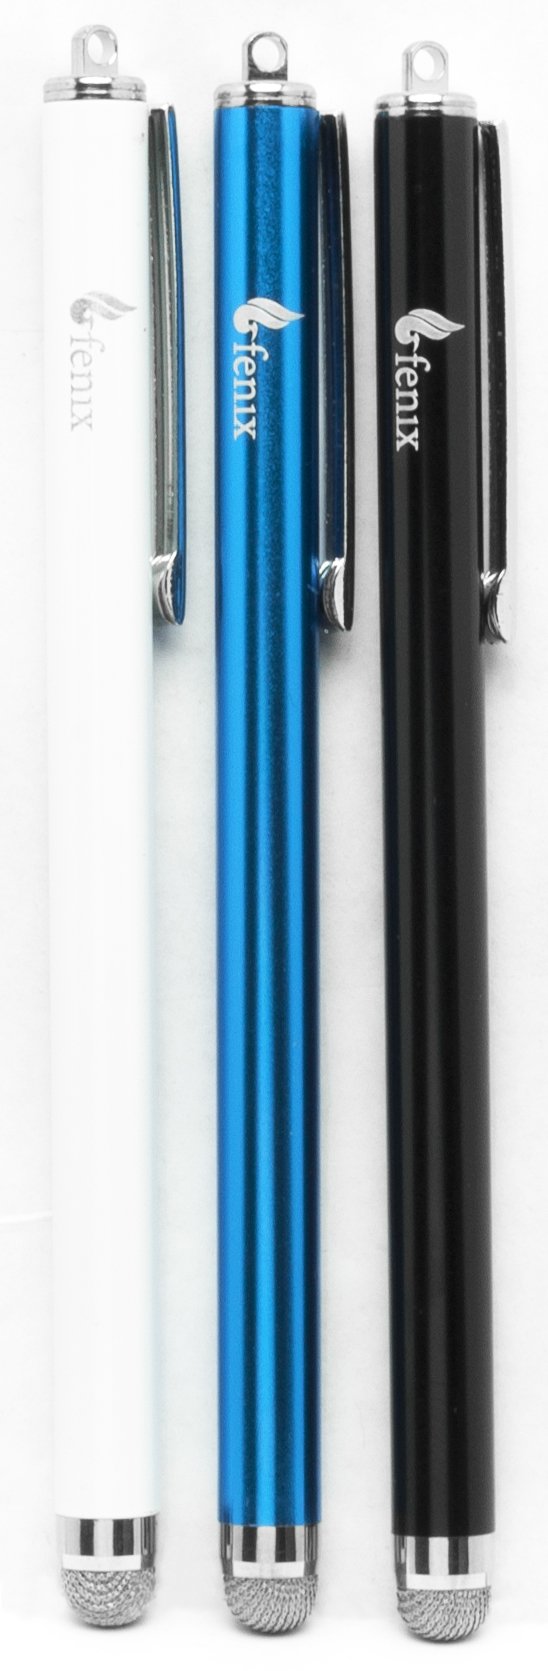 [Australia - AusPower] - Fenix - Set of 3 [Black, Blue, White] Stylus Pen with Micro Knit Hybrid Fiber Tip for iPhone 4/5/5c/6/6+, iPad/iPad Air/iPad Mini, Samsung Galaxy S4/S5/S6/Edge, Kindle Fire, Surface Pro and More 